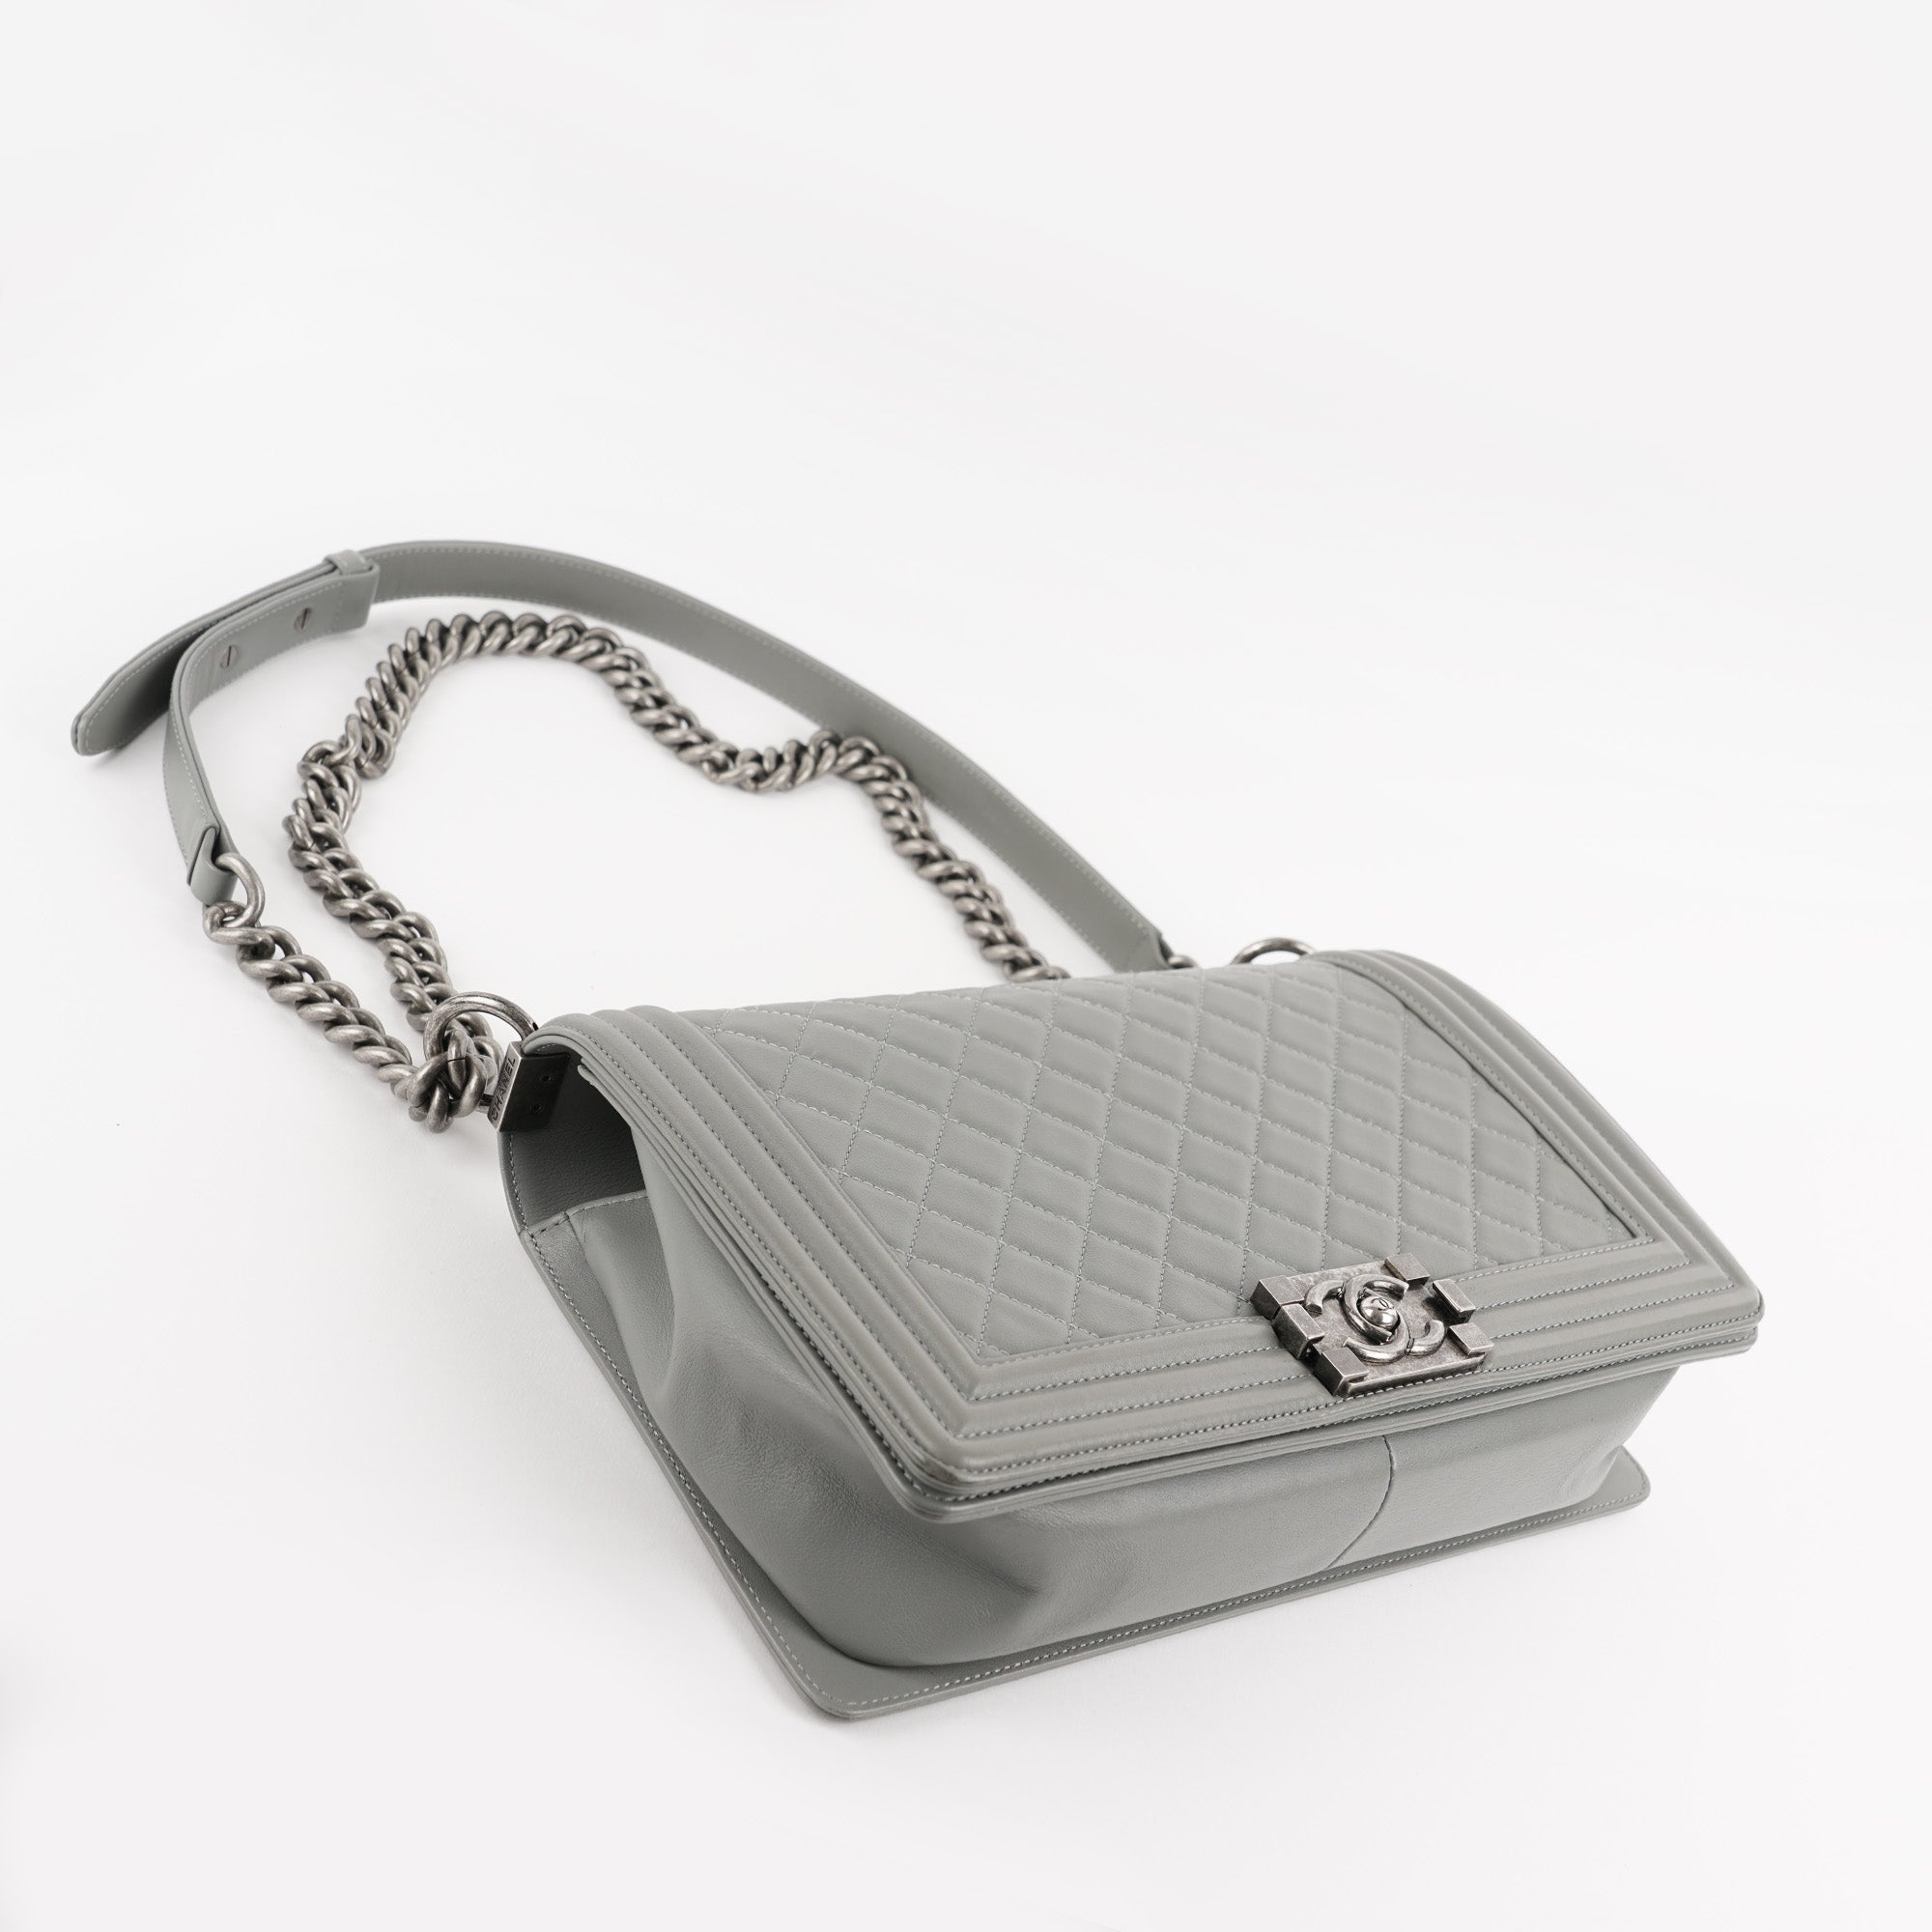 Boy Bag New Medium - CHANEL - Affordable Luxury image